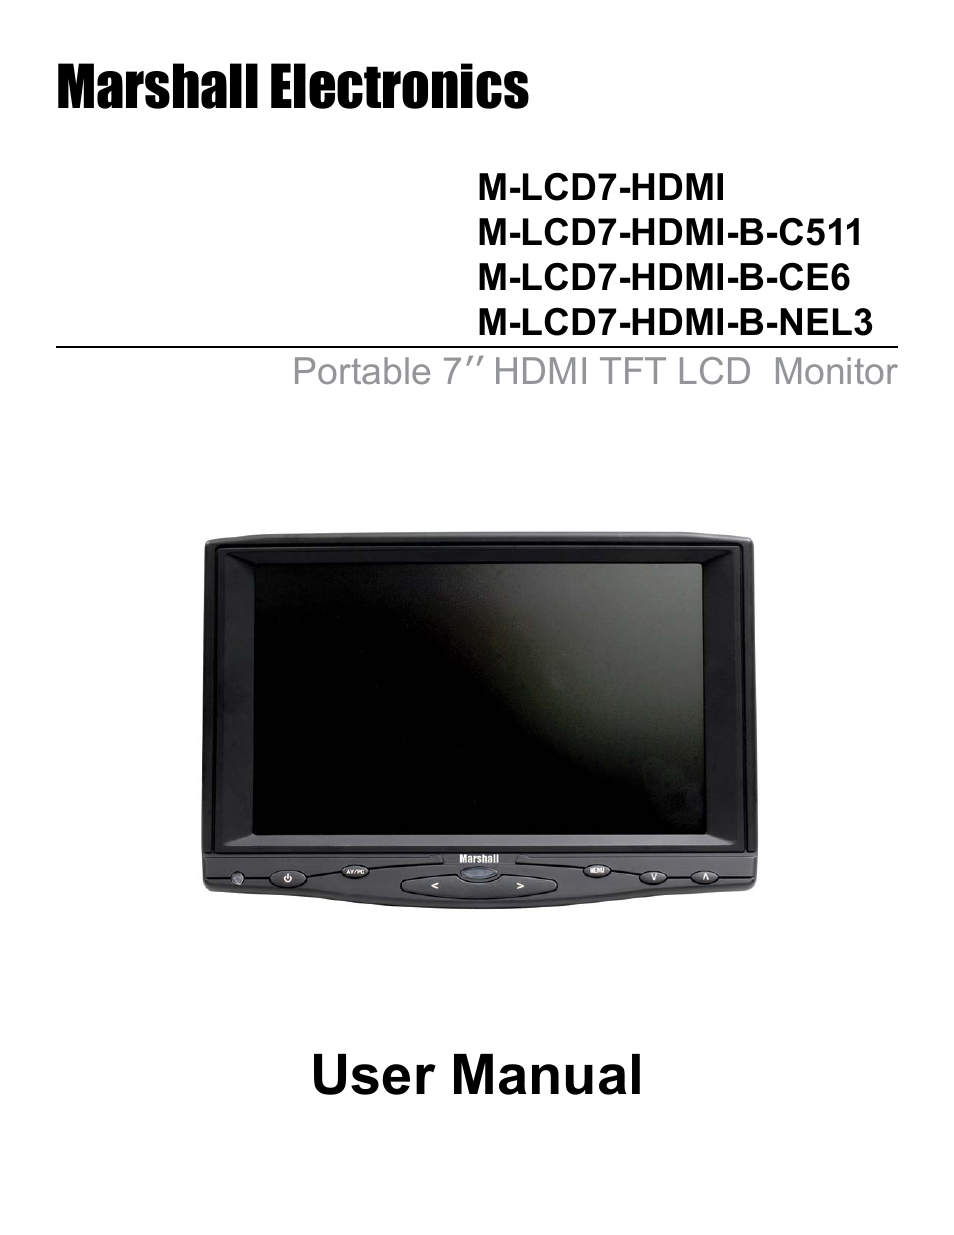 M-LCD7-HDMI